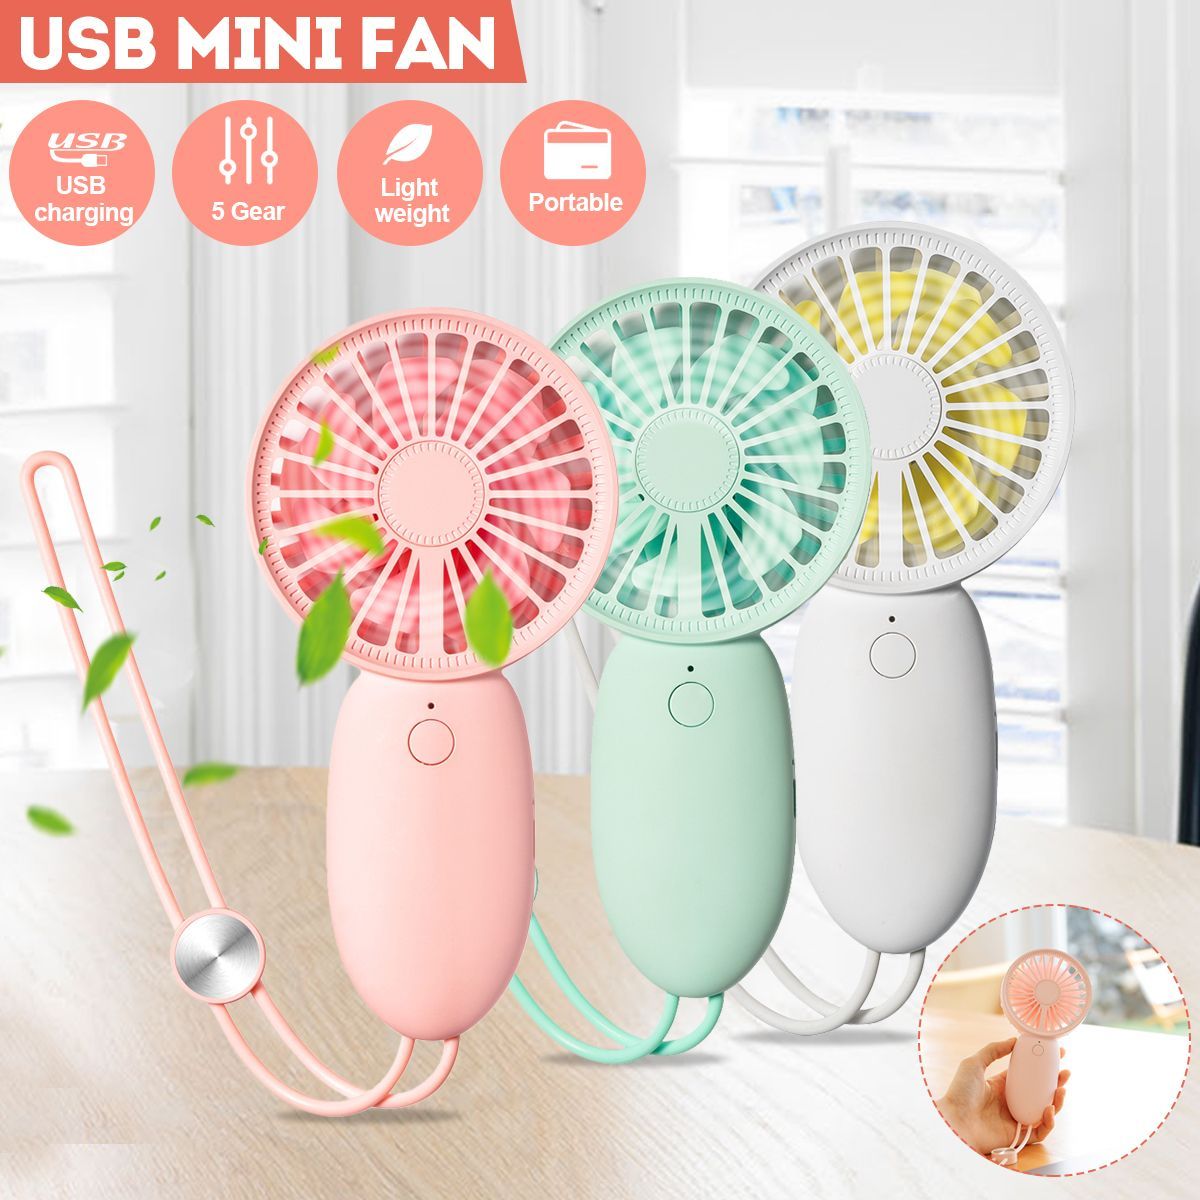 Mini-USB-Fan-Portable-Handheld-Rechargeable-5-Level-Adjustment-Cooling-Fan-Wind-Cooler-for-Home-Offi-1733813